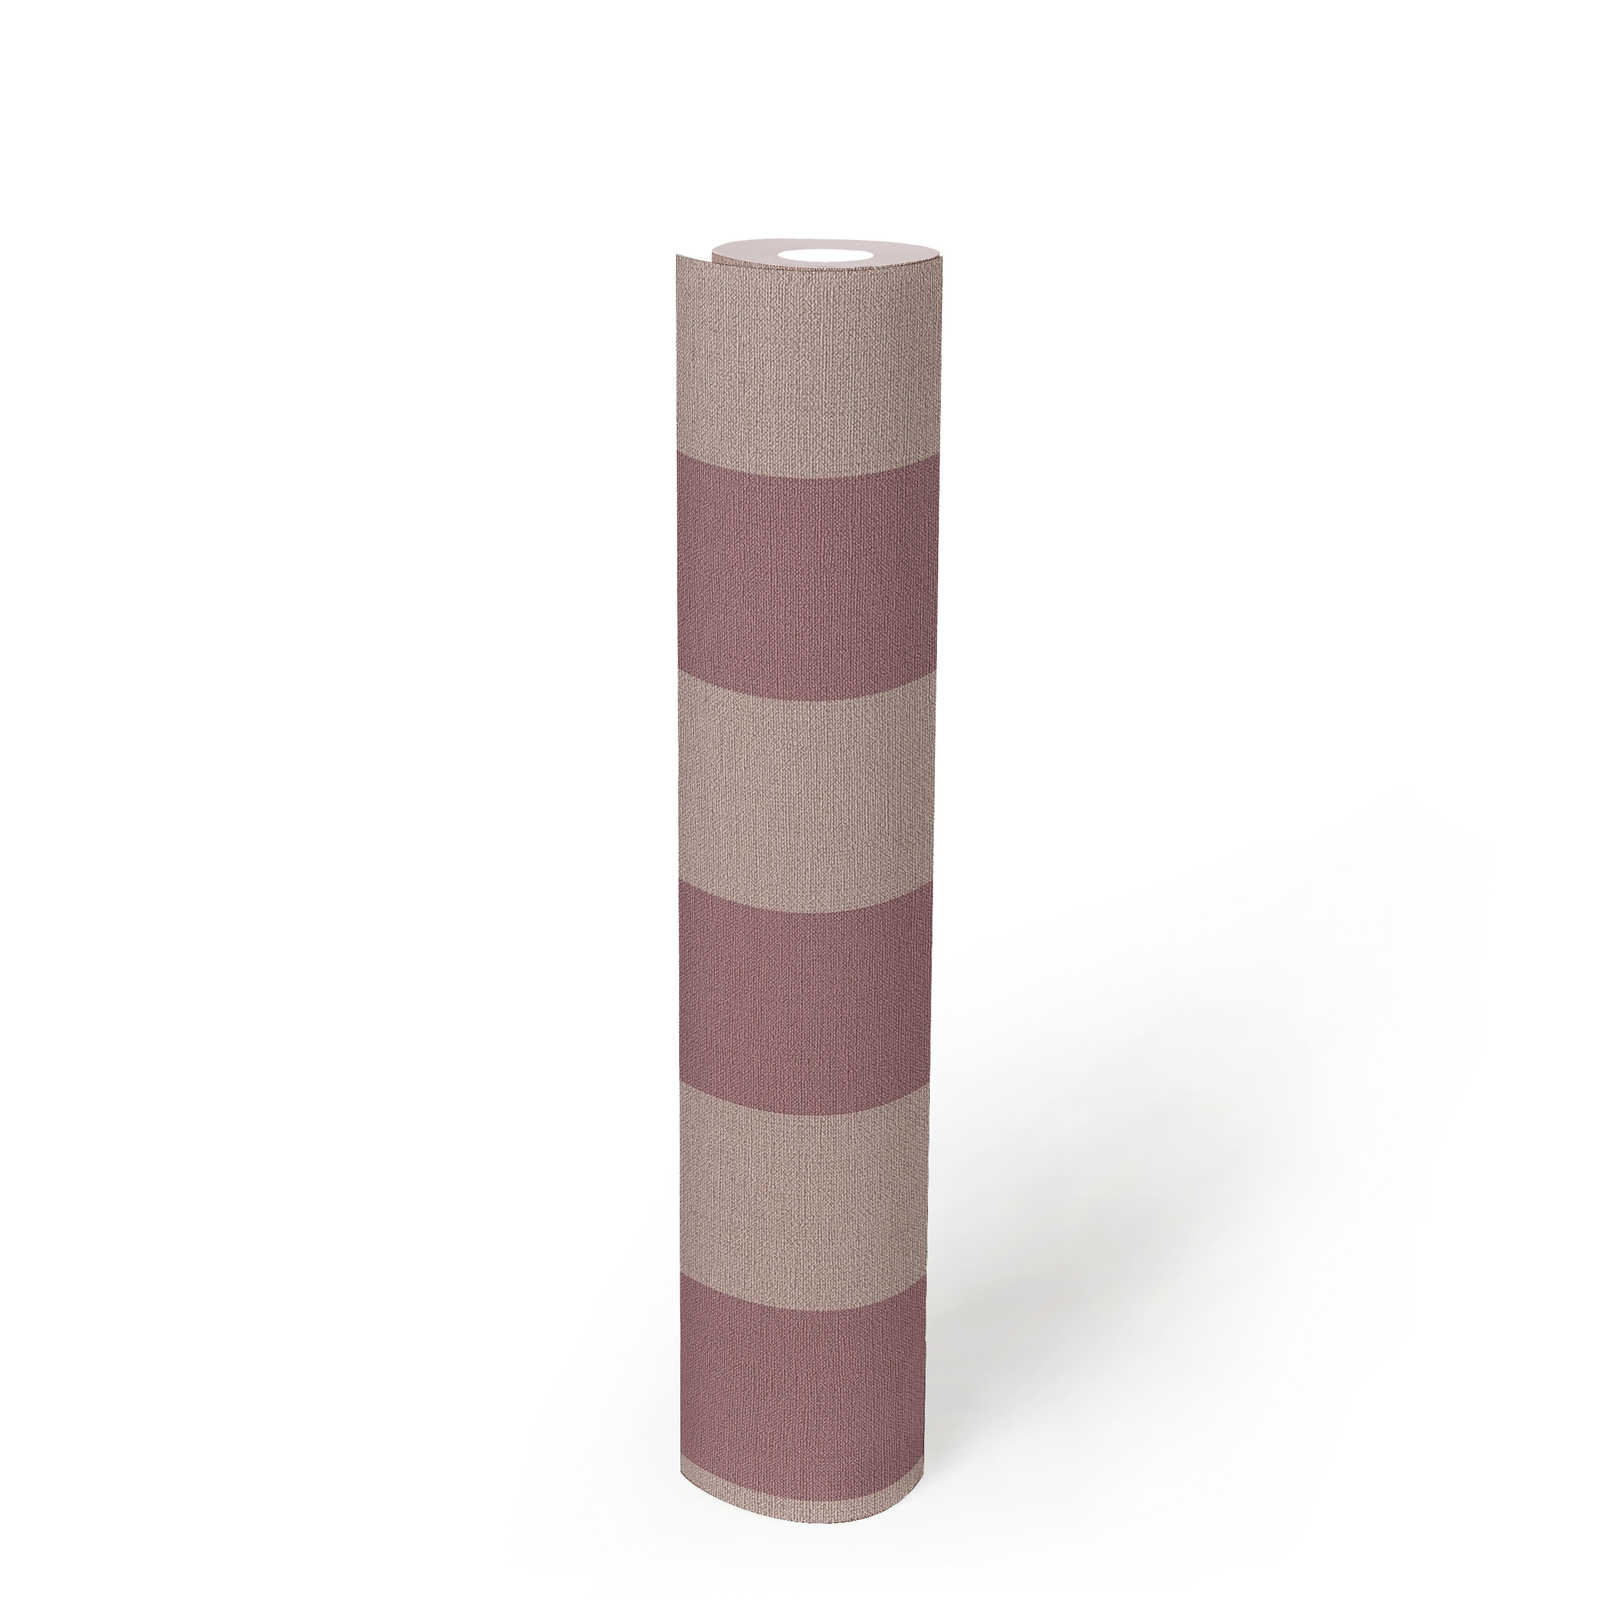             PVC-free striped wallpaper with linen look - purple, grey
        